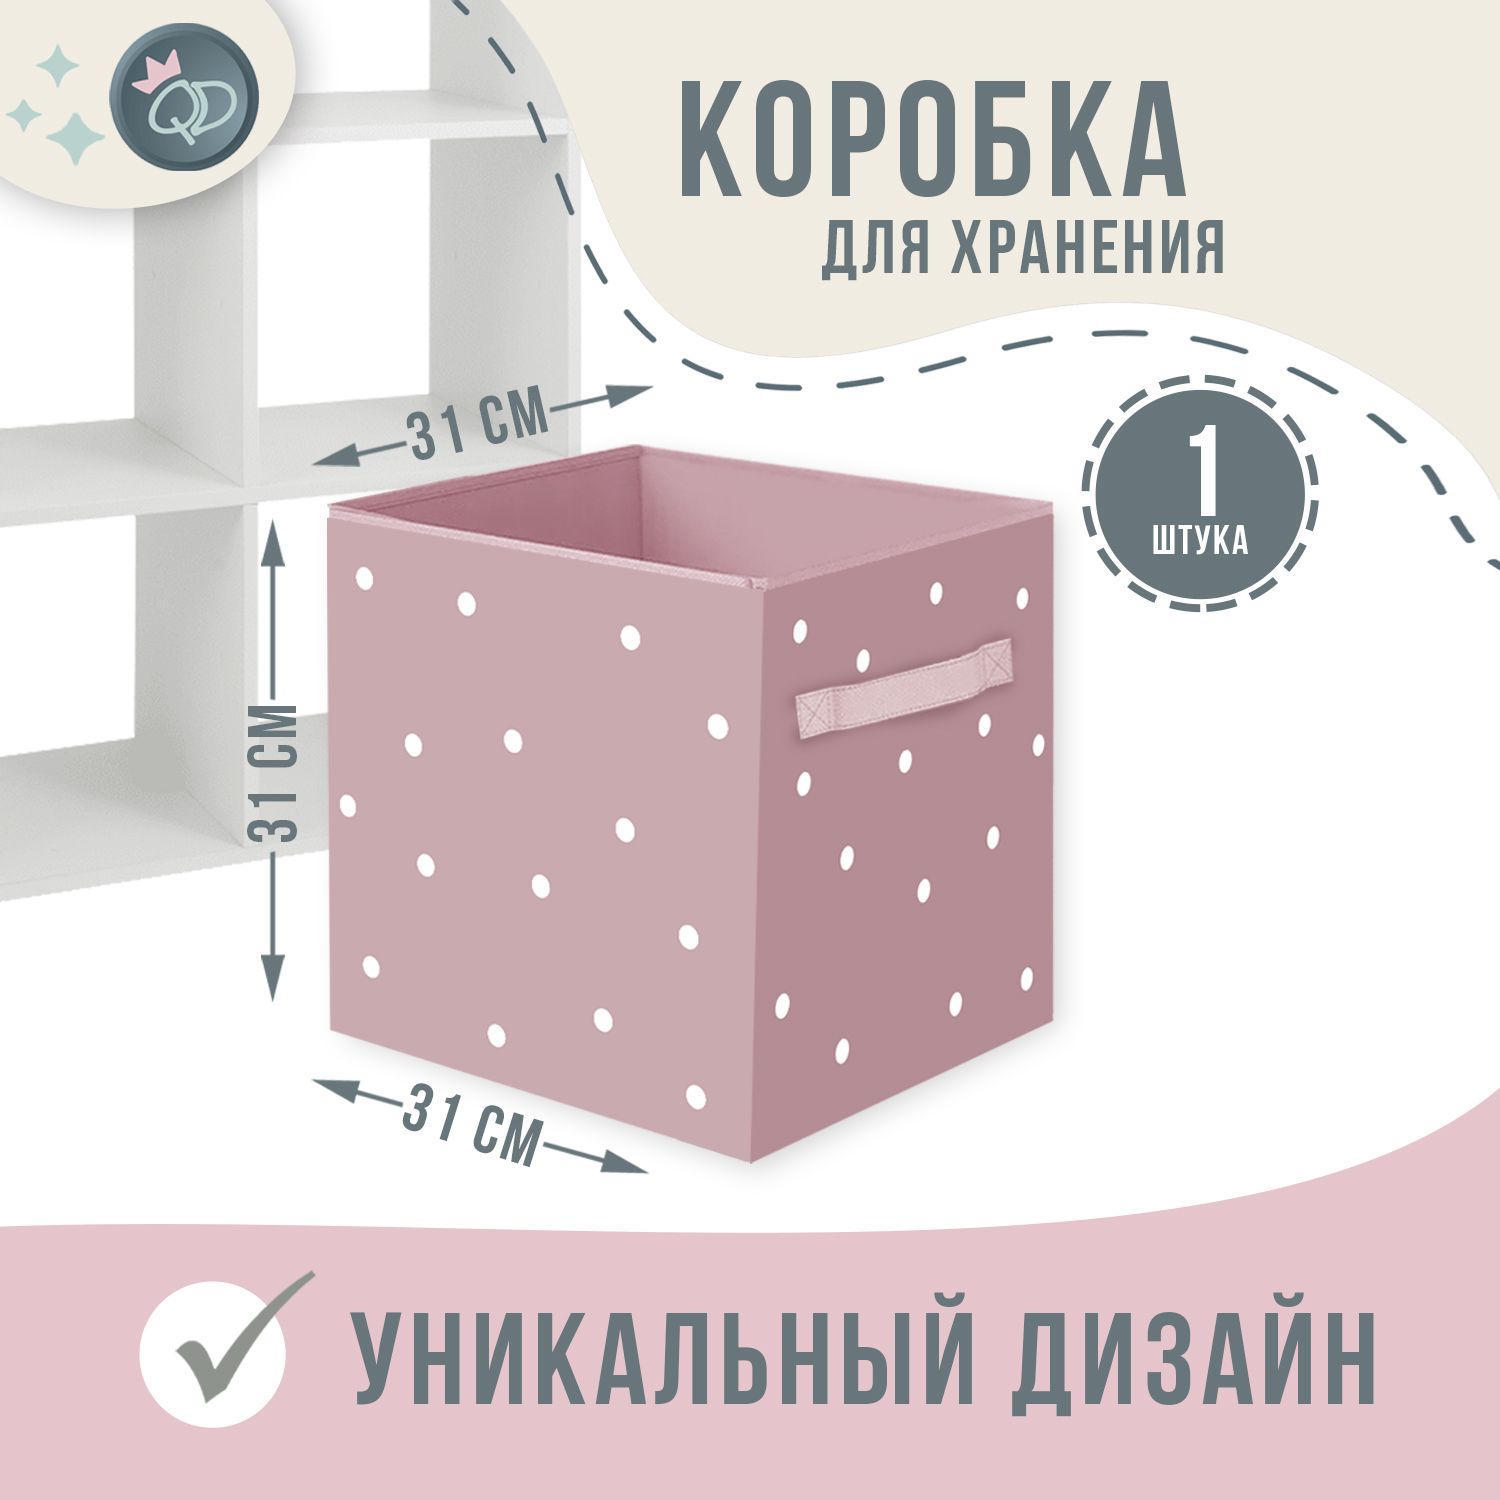 Идея упаковки – Концепт дизайна коробки для CHV